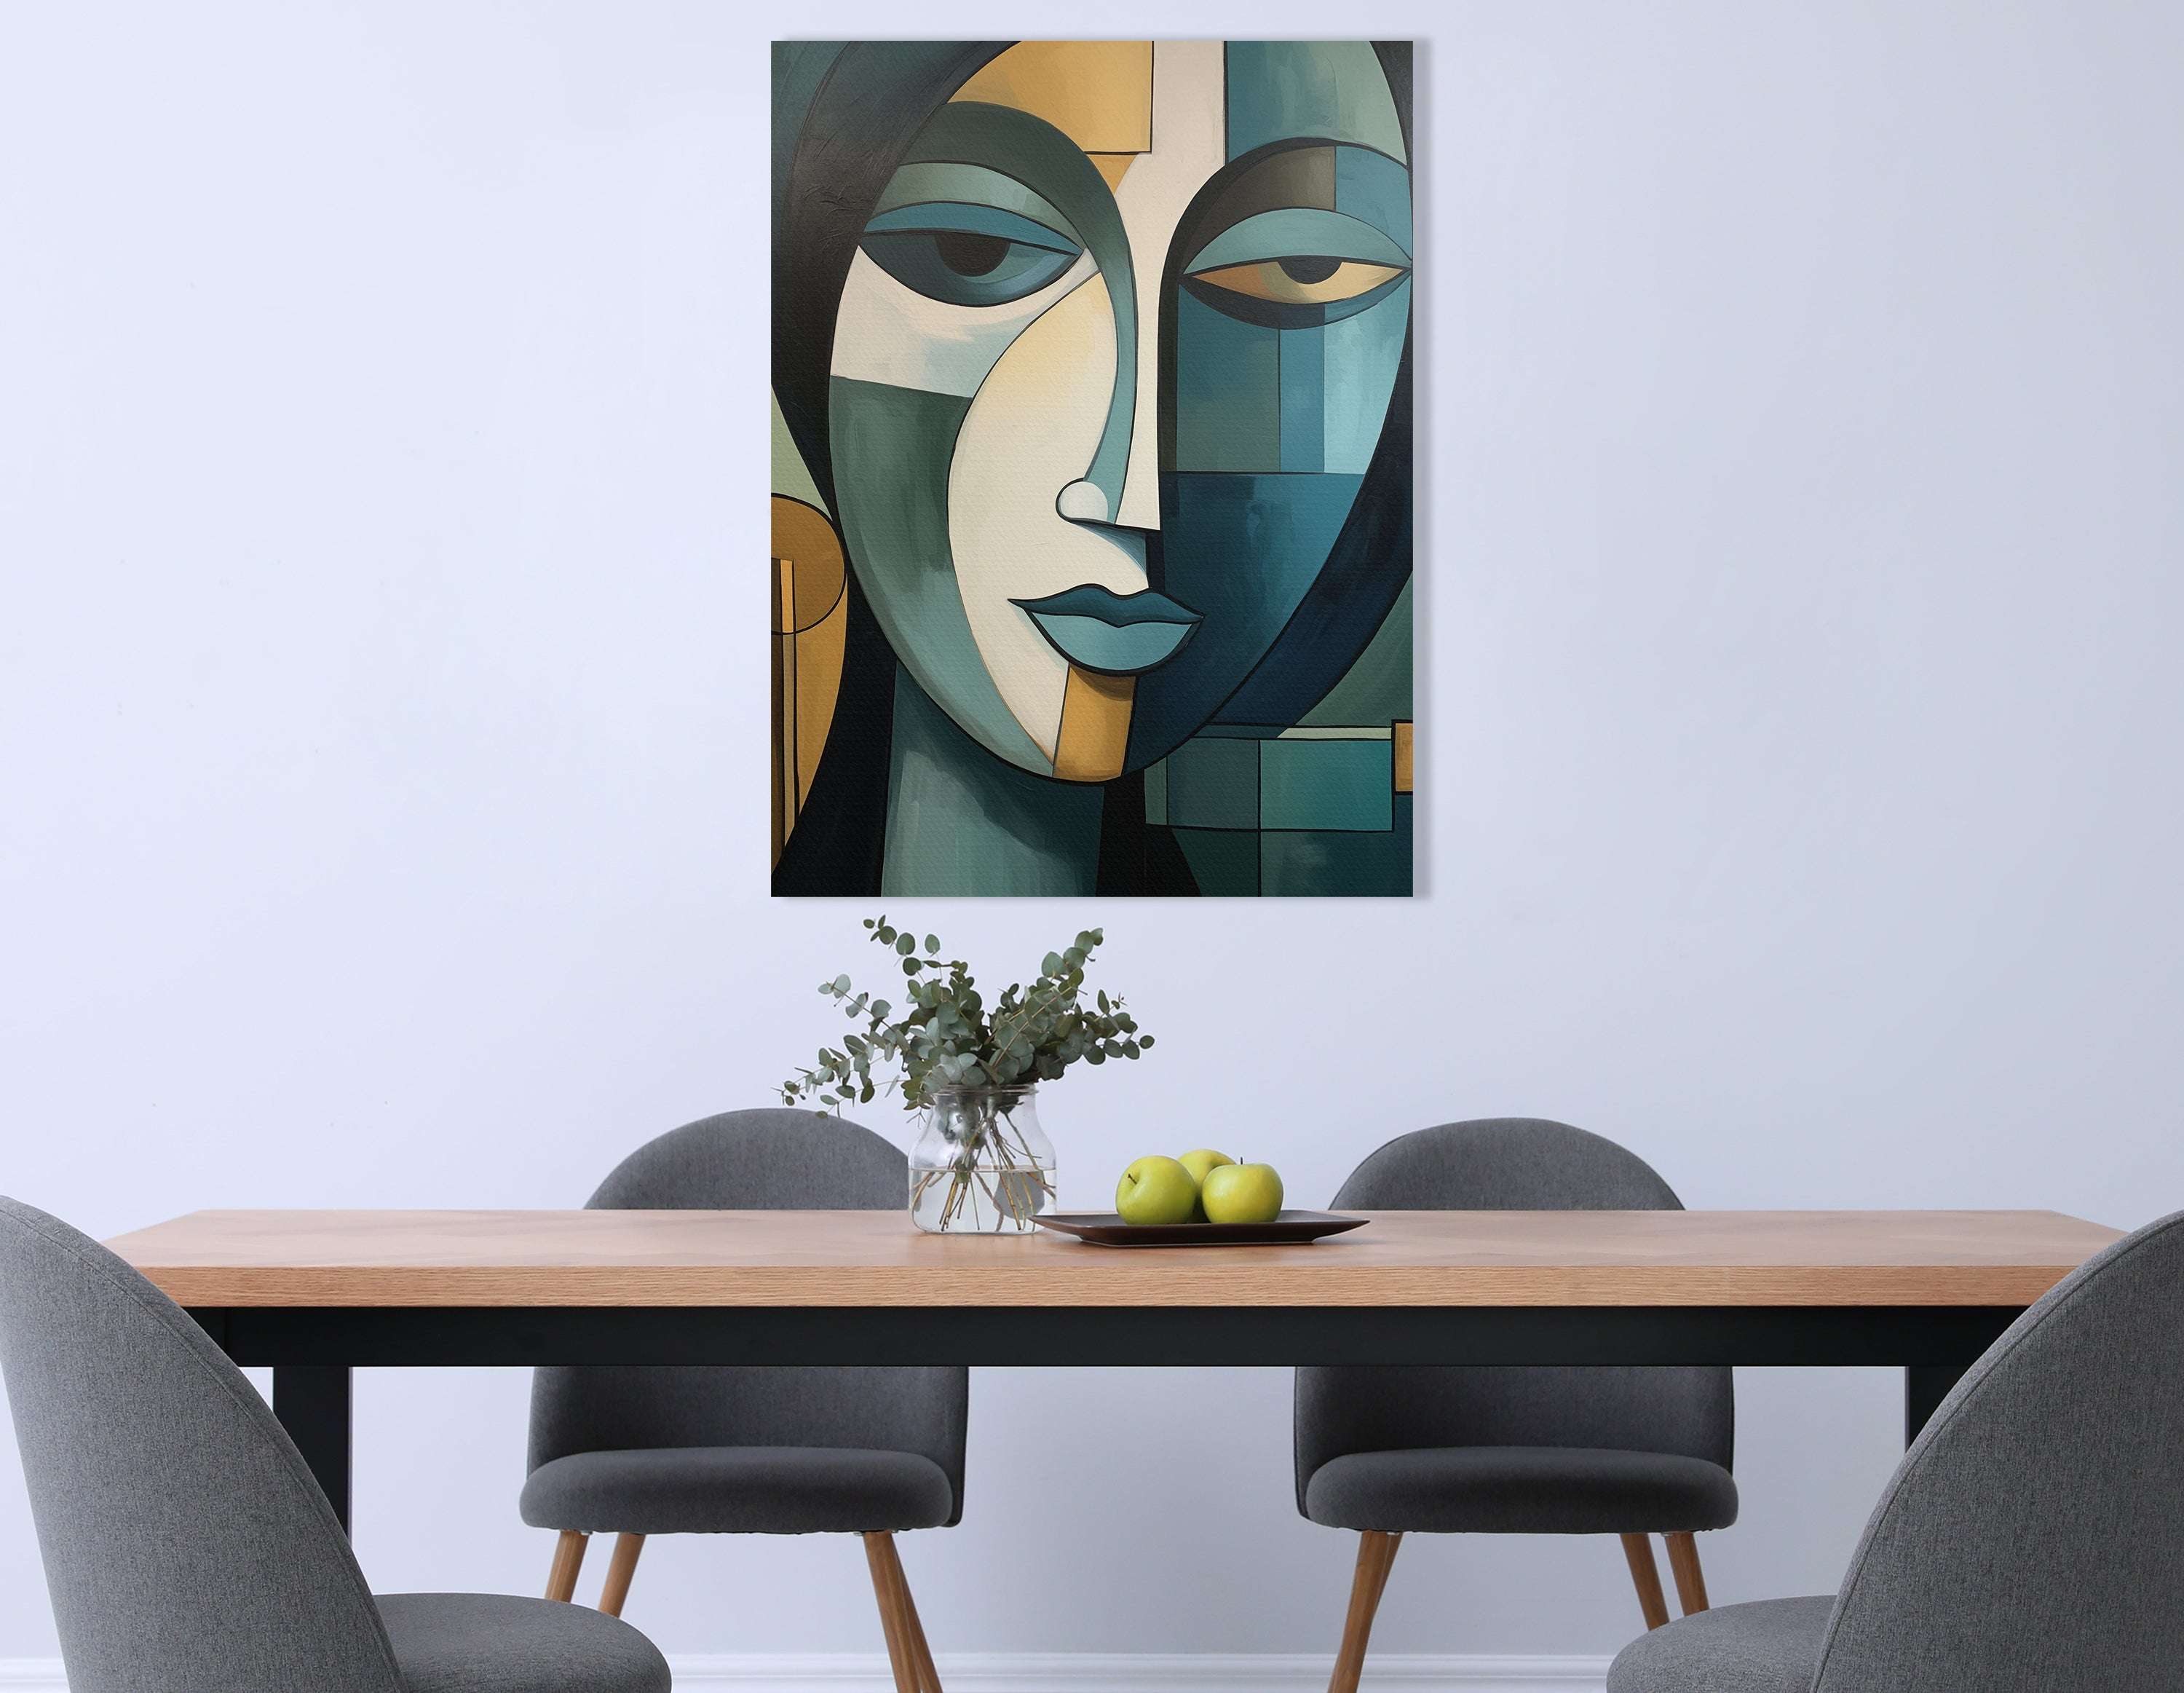 Modern Abstract Cubistic Human Face - Canvas Print - Artoholica Ready to Hang Canvas Print